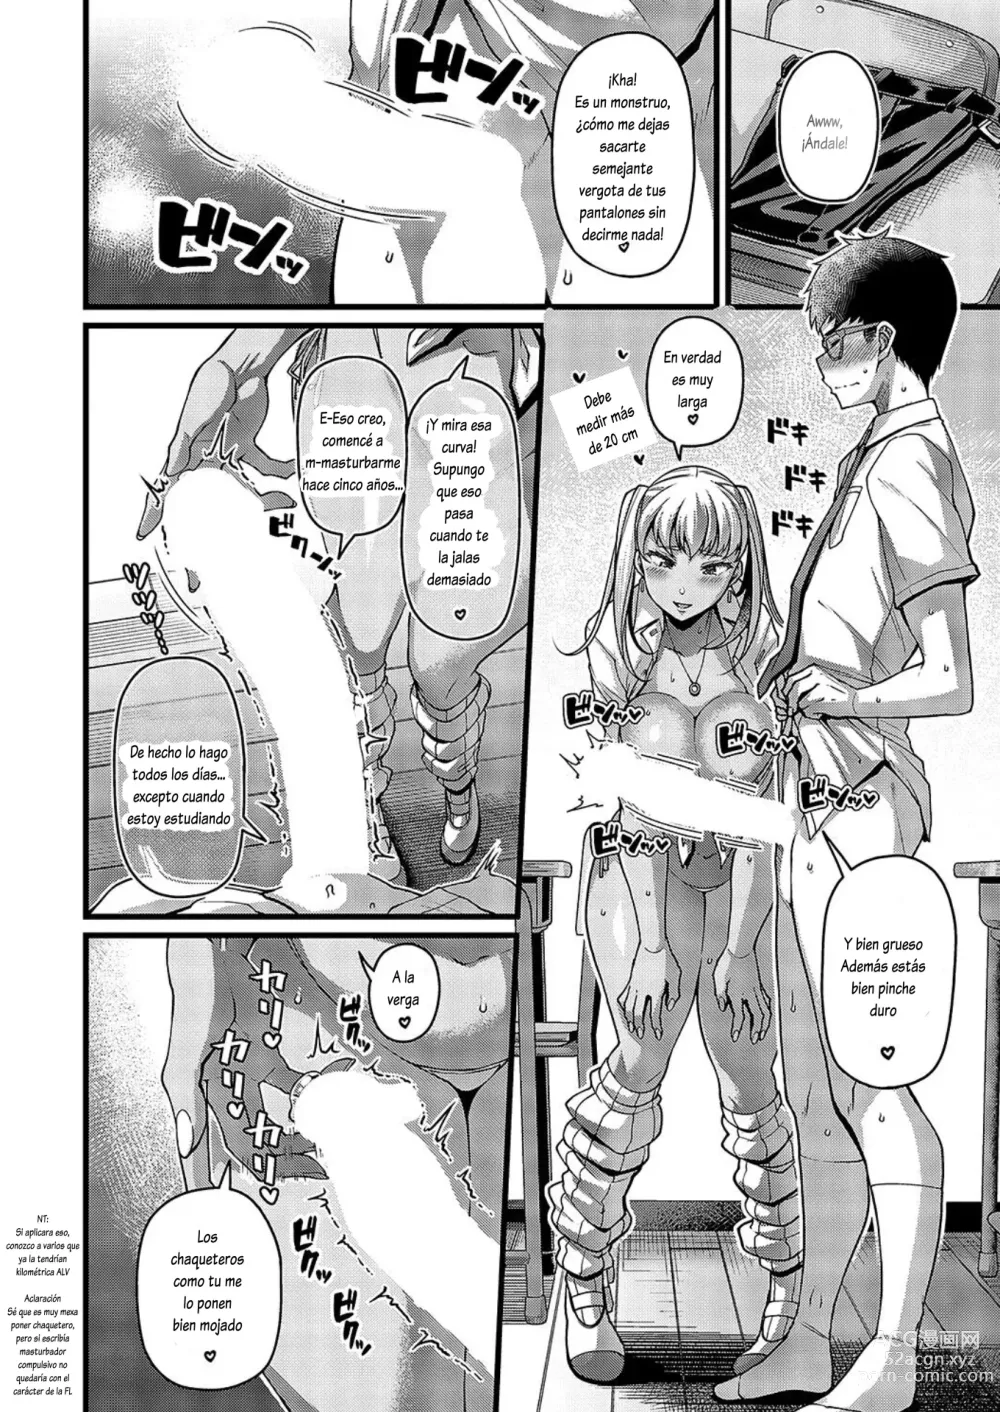 Page 6 of manga Way to Go!